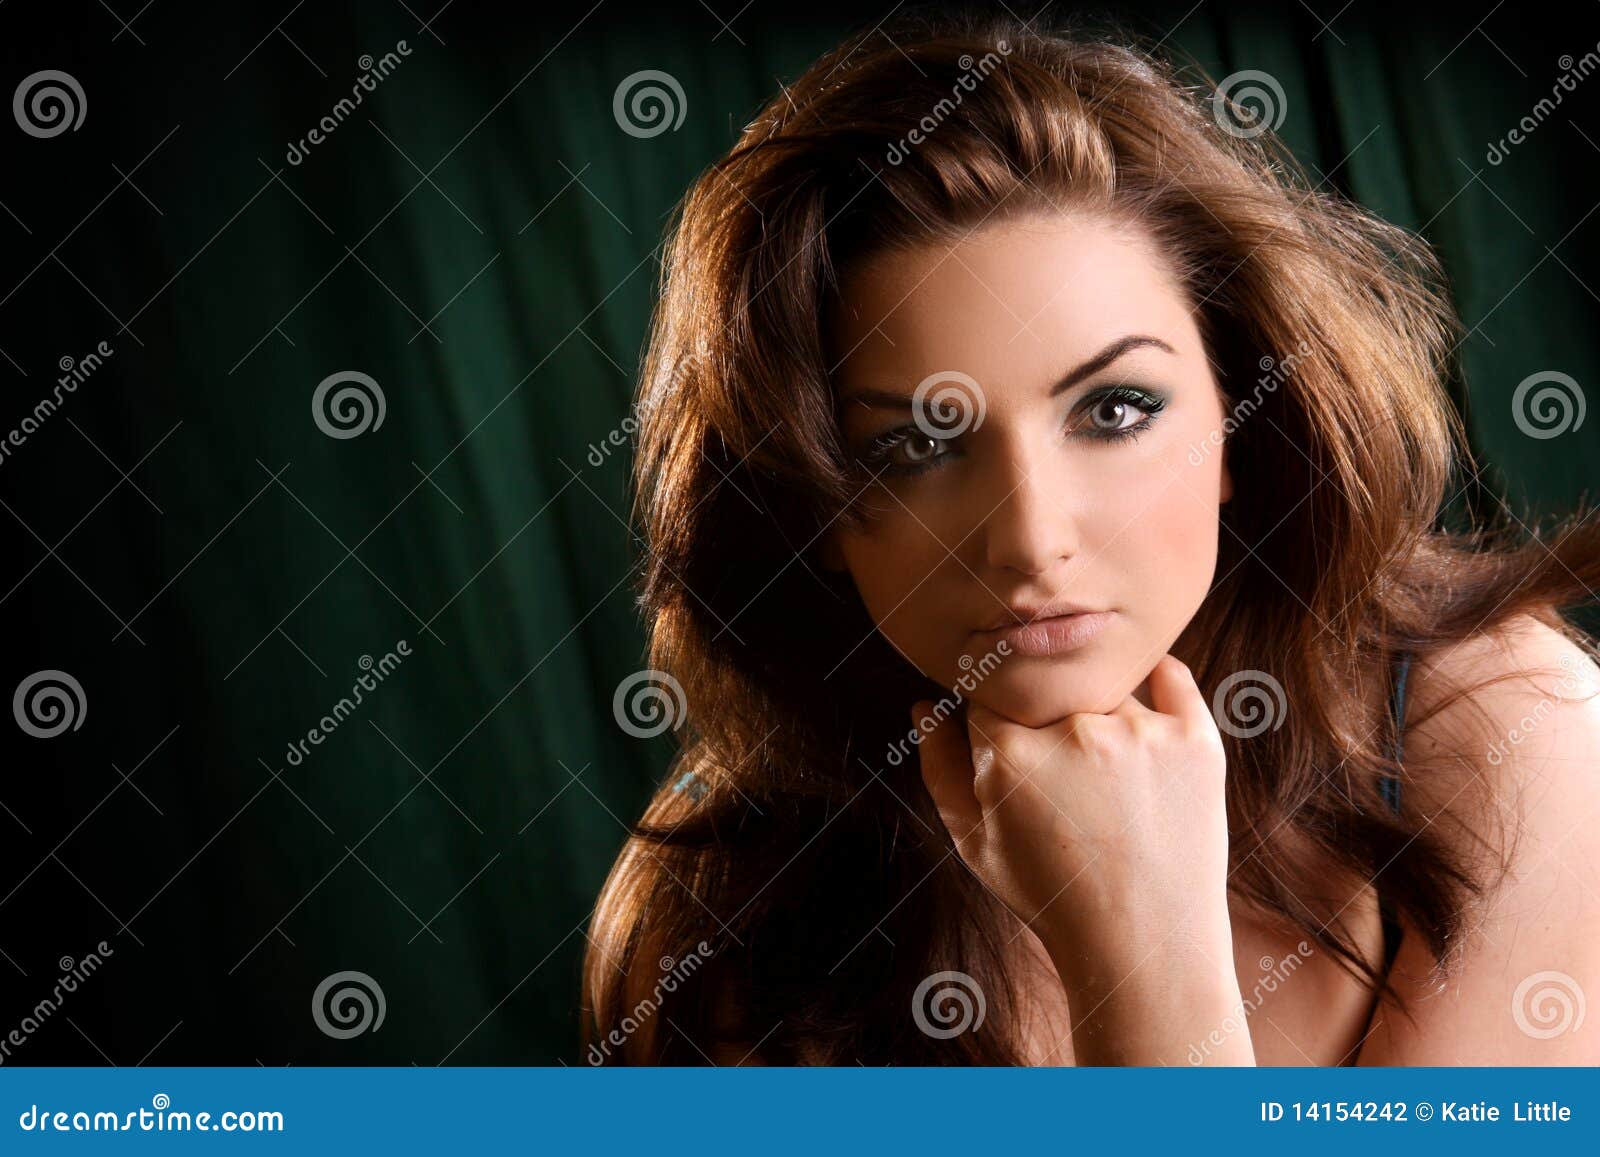 Glamorous Woman stock photo. Image of gorgeous, lady - 14154242